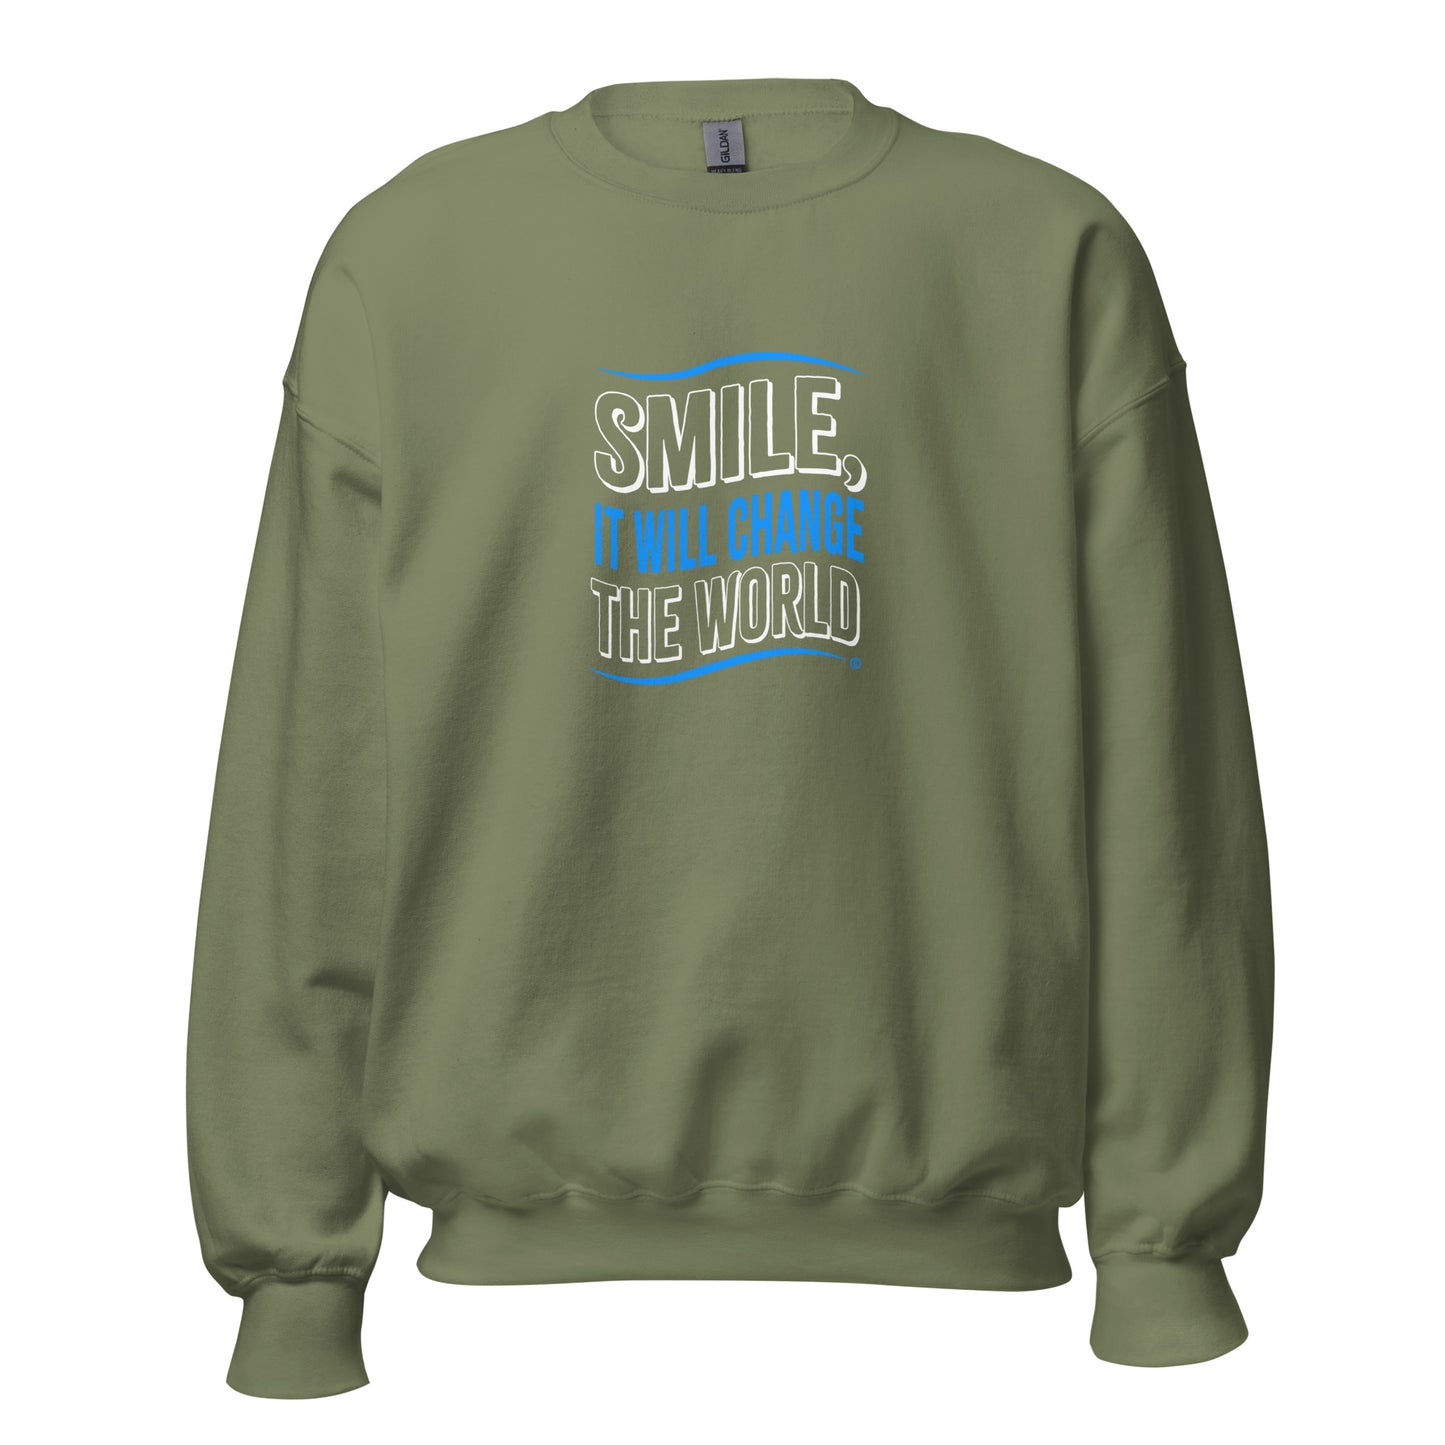 Smile, It will Change the World Unisex Sweatshirts